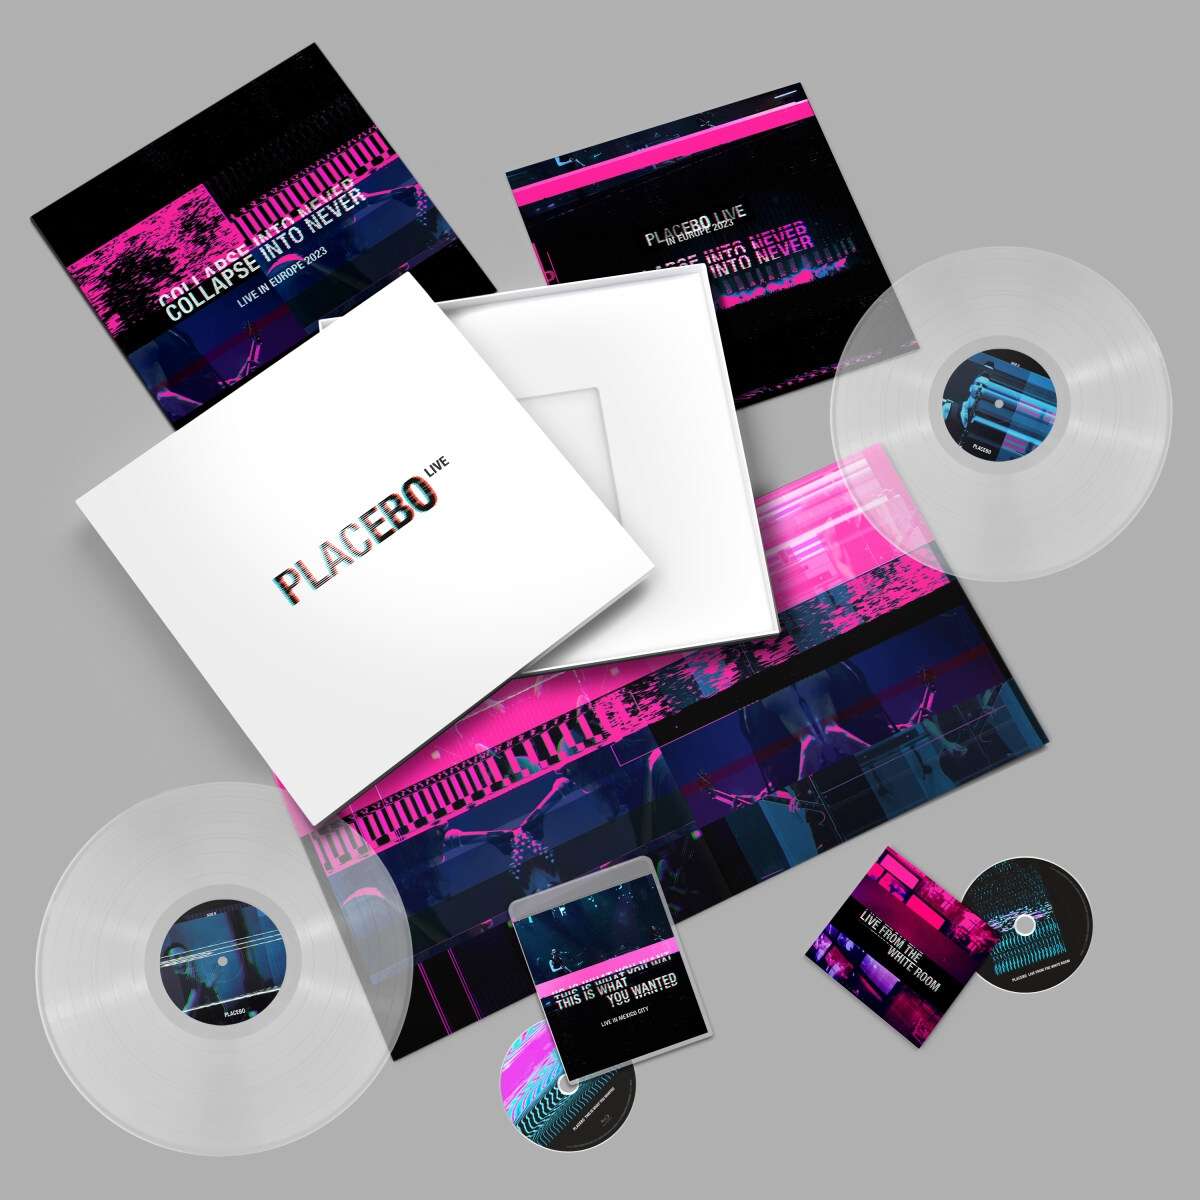 Placebo
 - Placebo LIVE (Limited Edition) (Premium Box Set) (Clear Vinyl)
